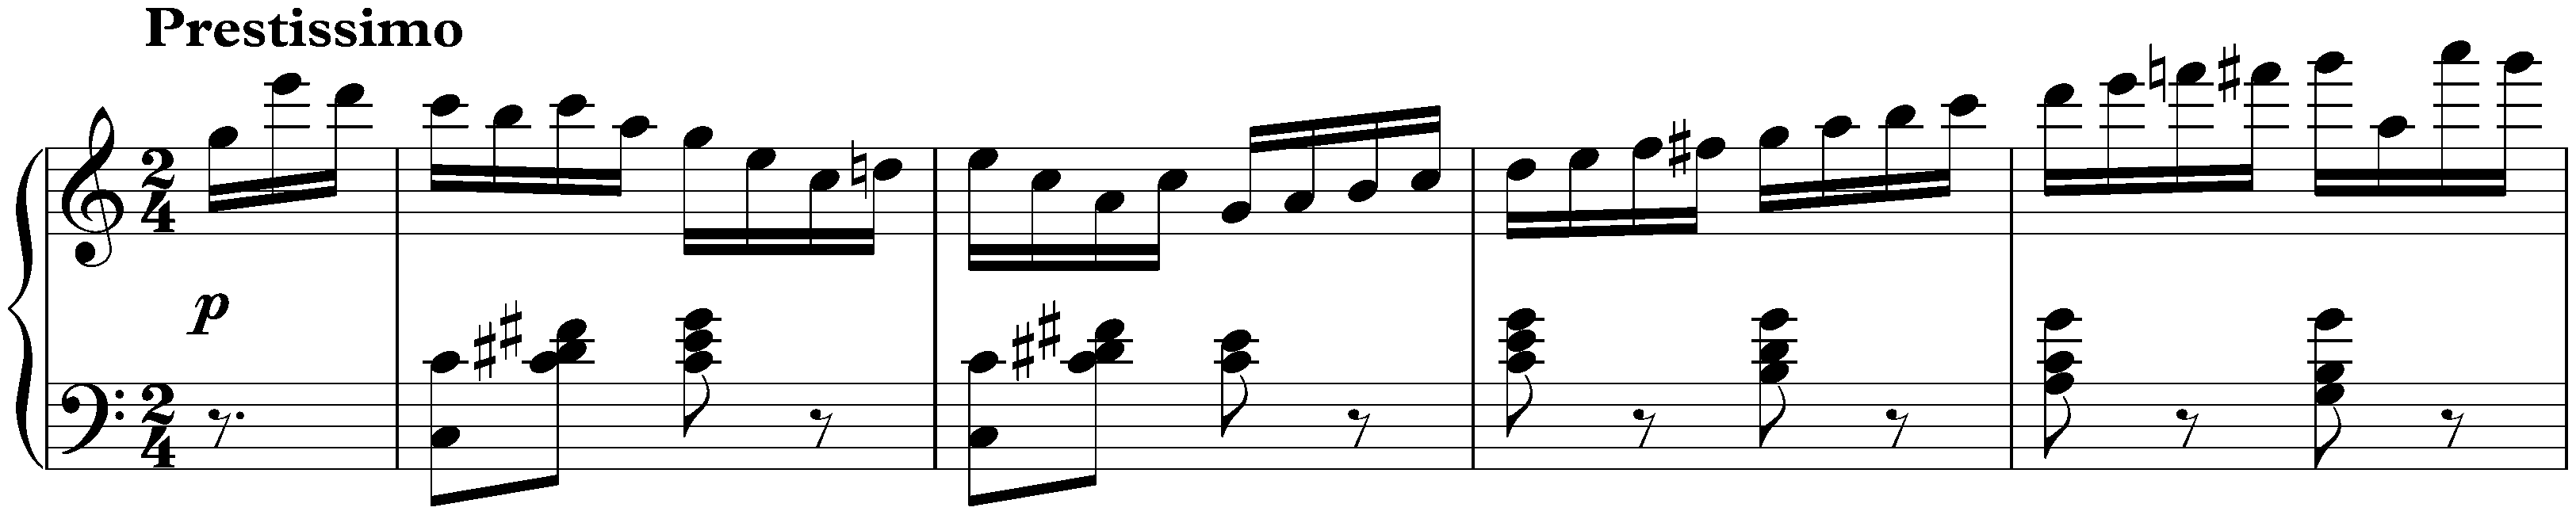 Perpetuum mobile in C major, op. 119